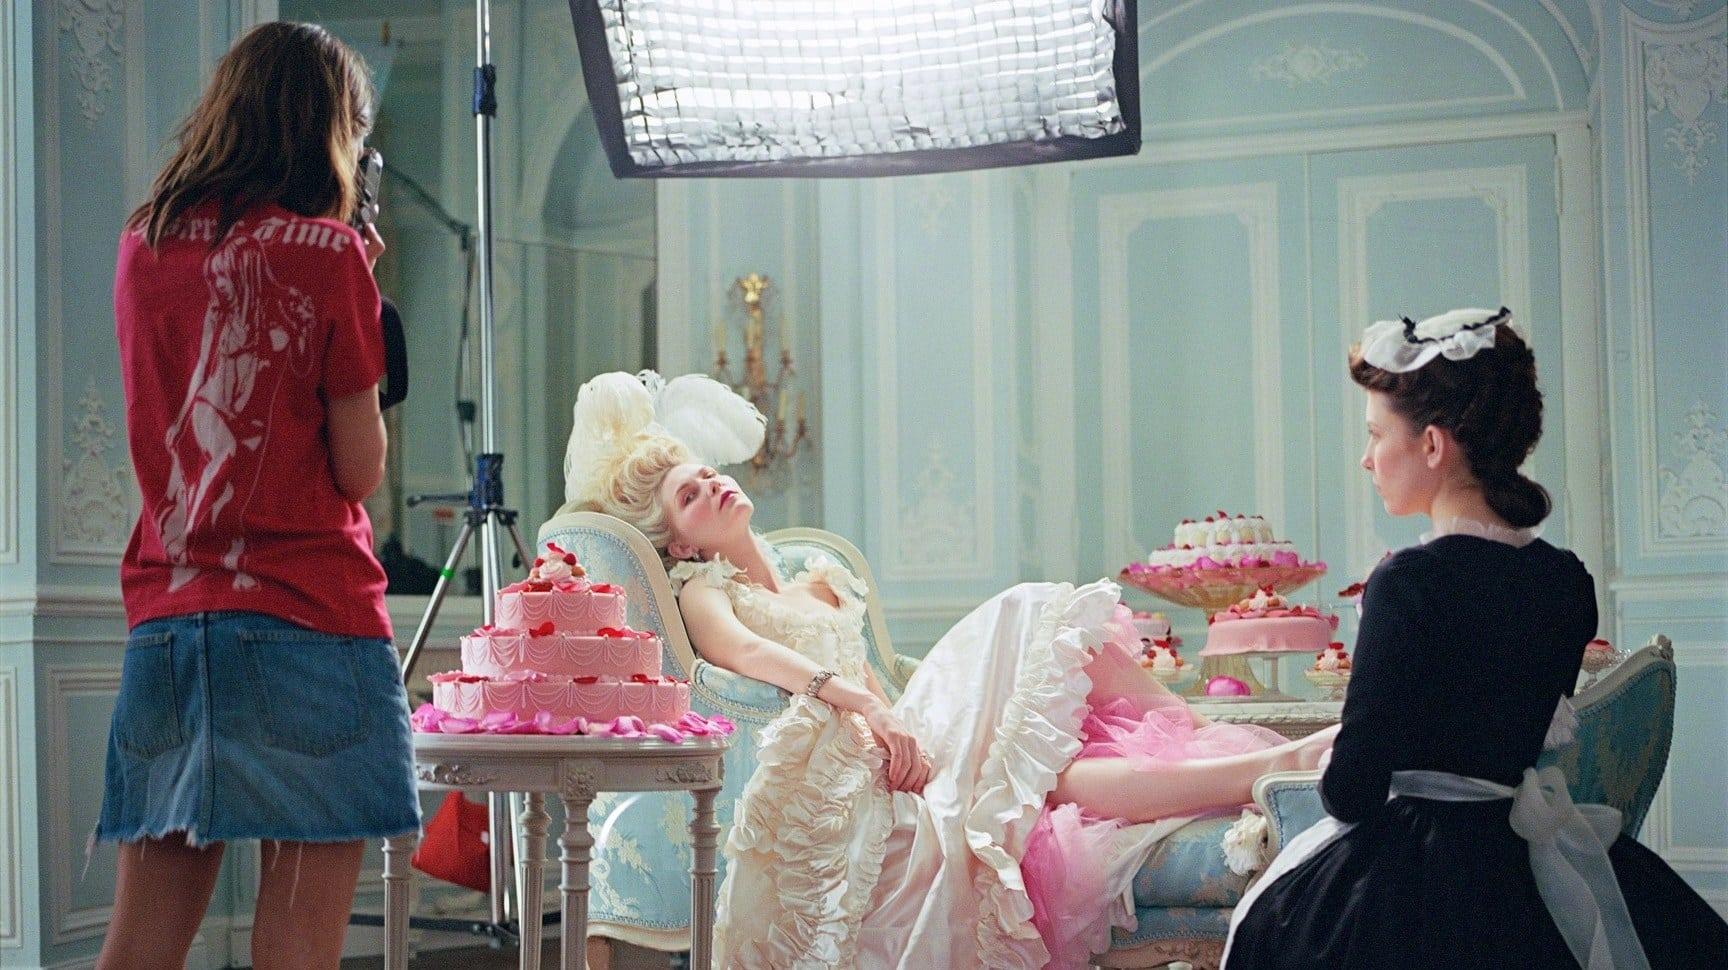 The Making of Marie Antoinette backdrop